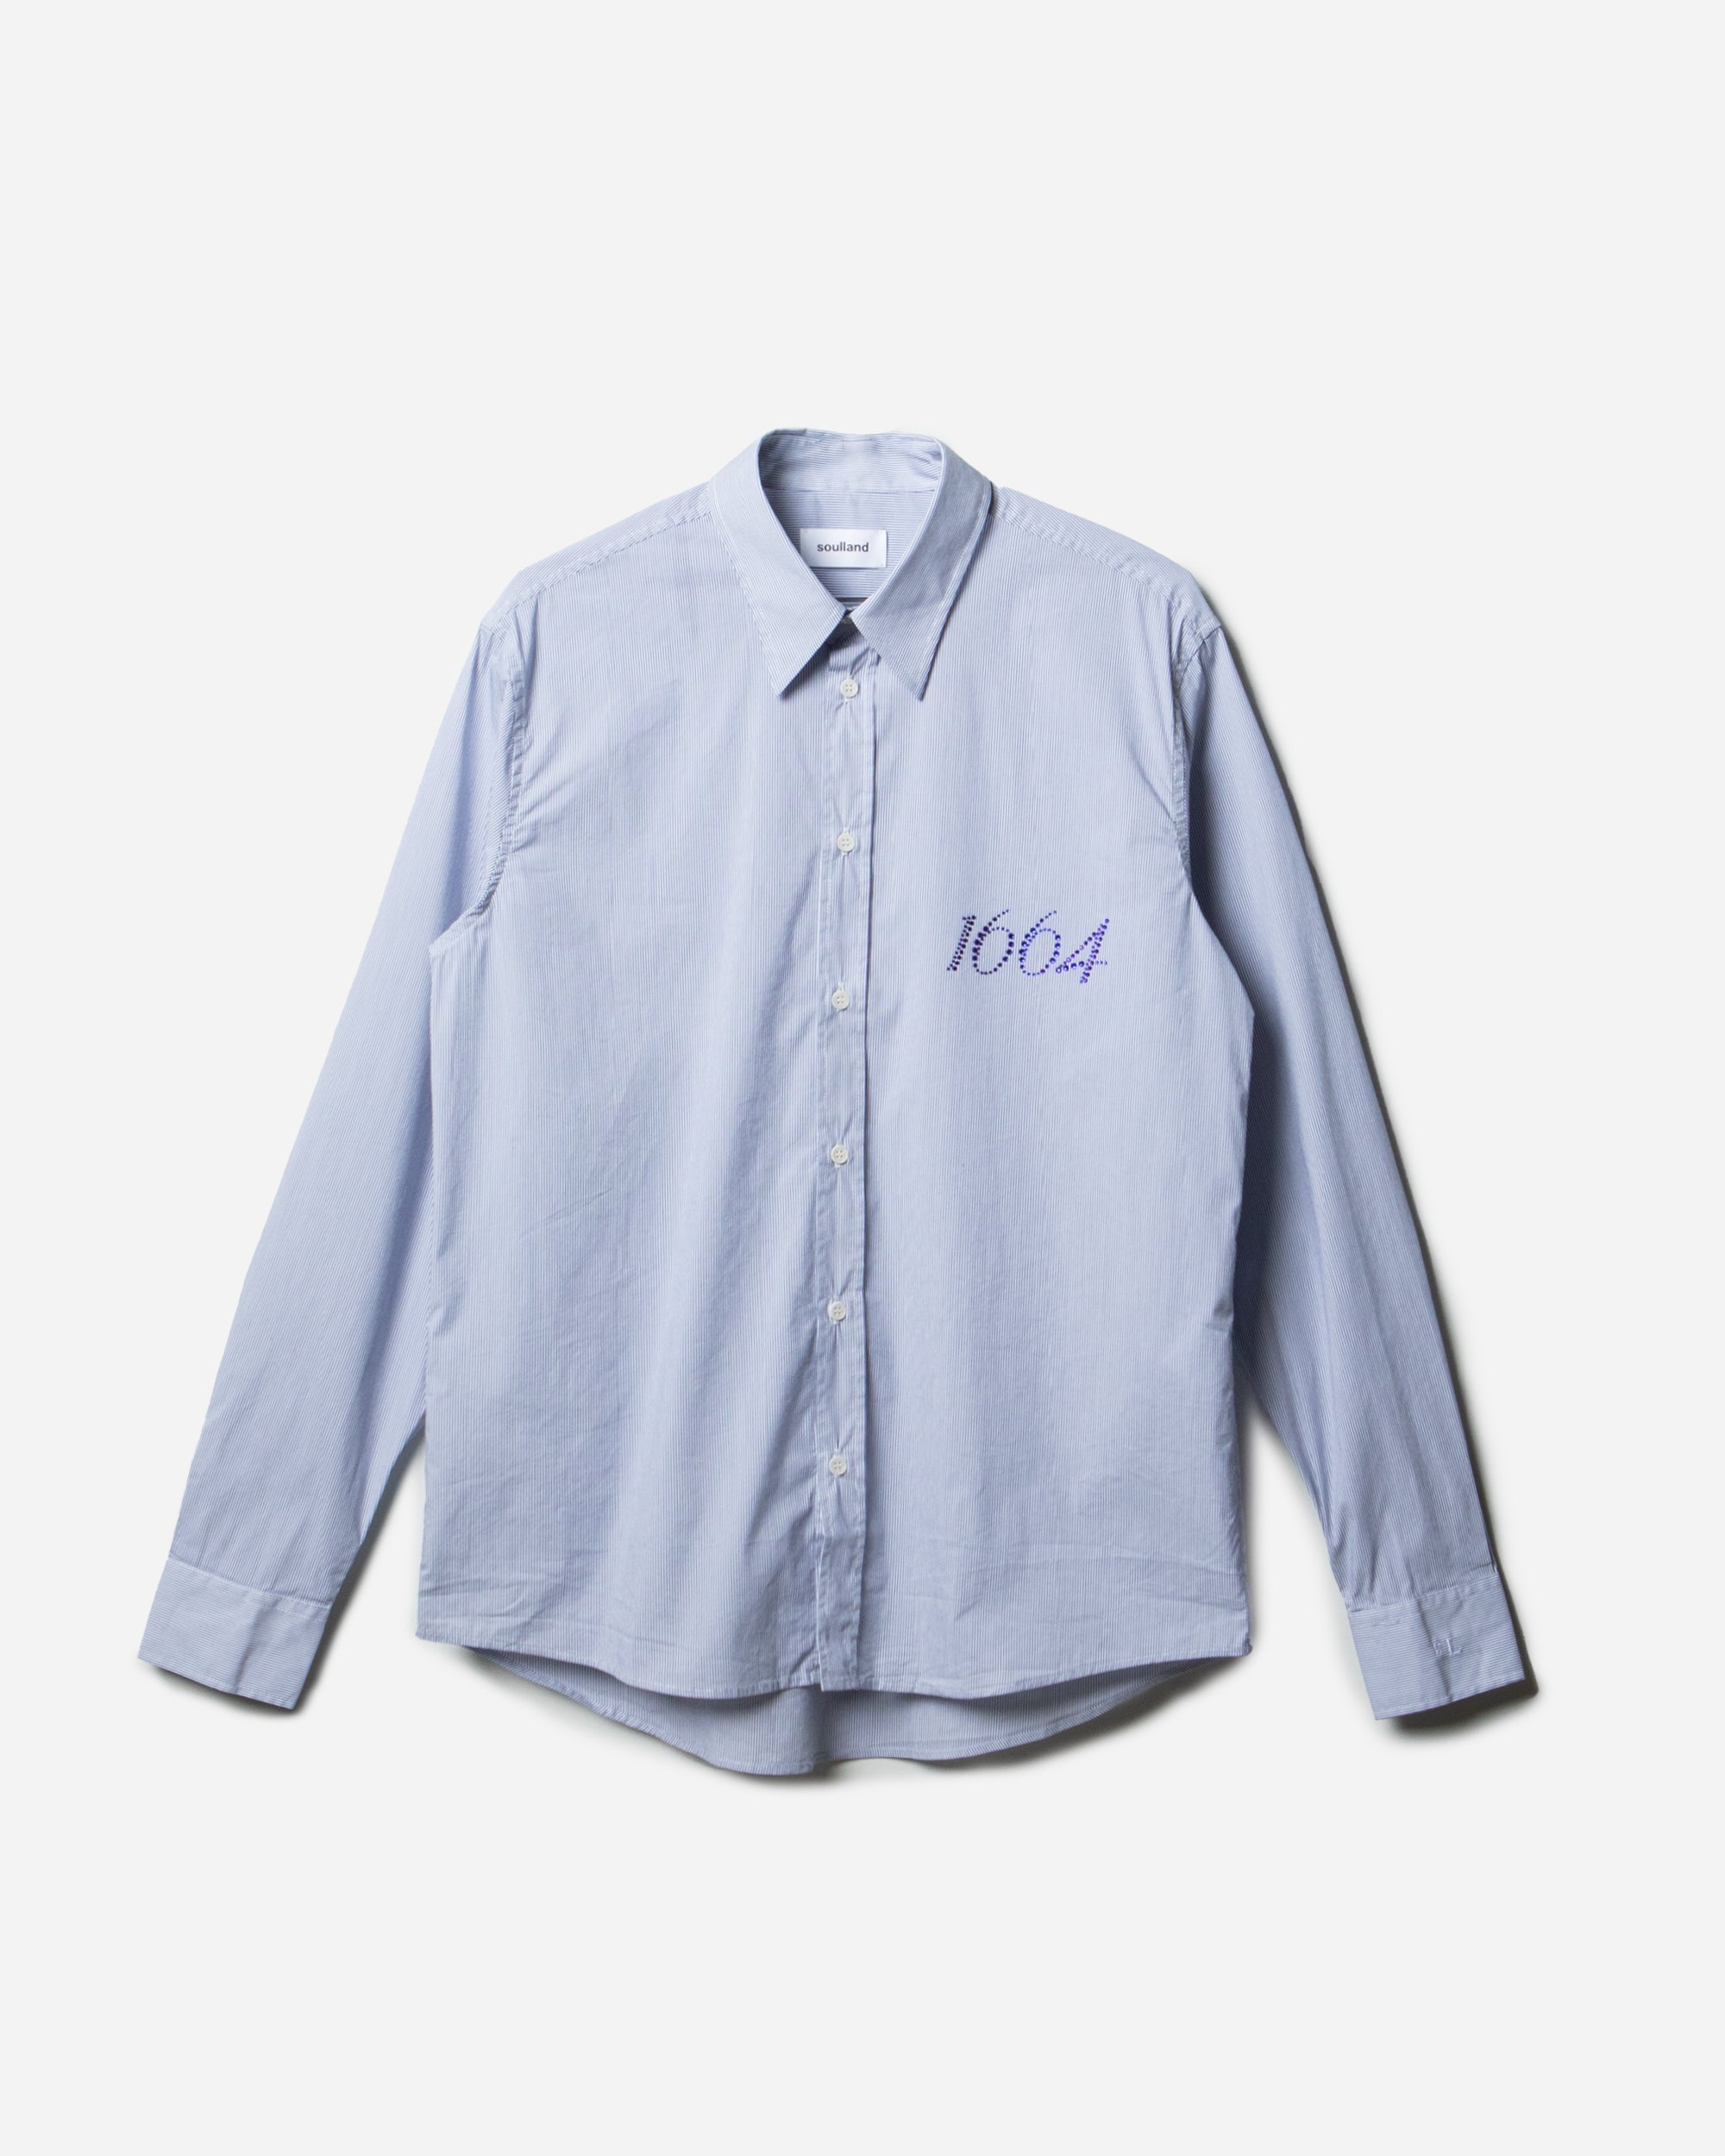 Soulland x 1664 RADO shirt